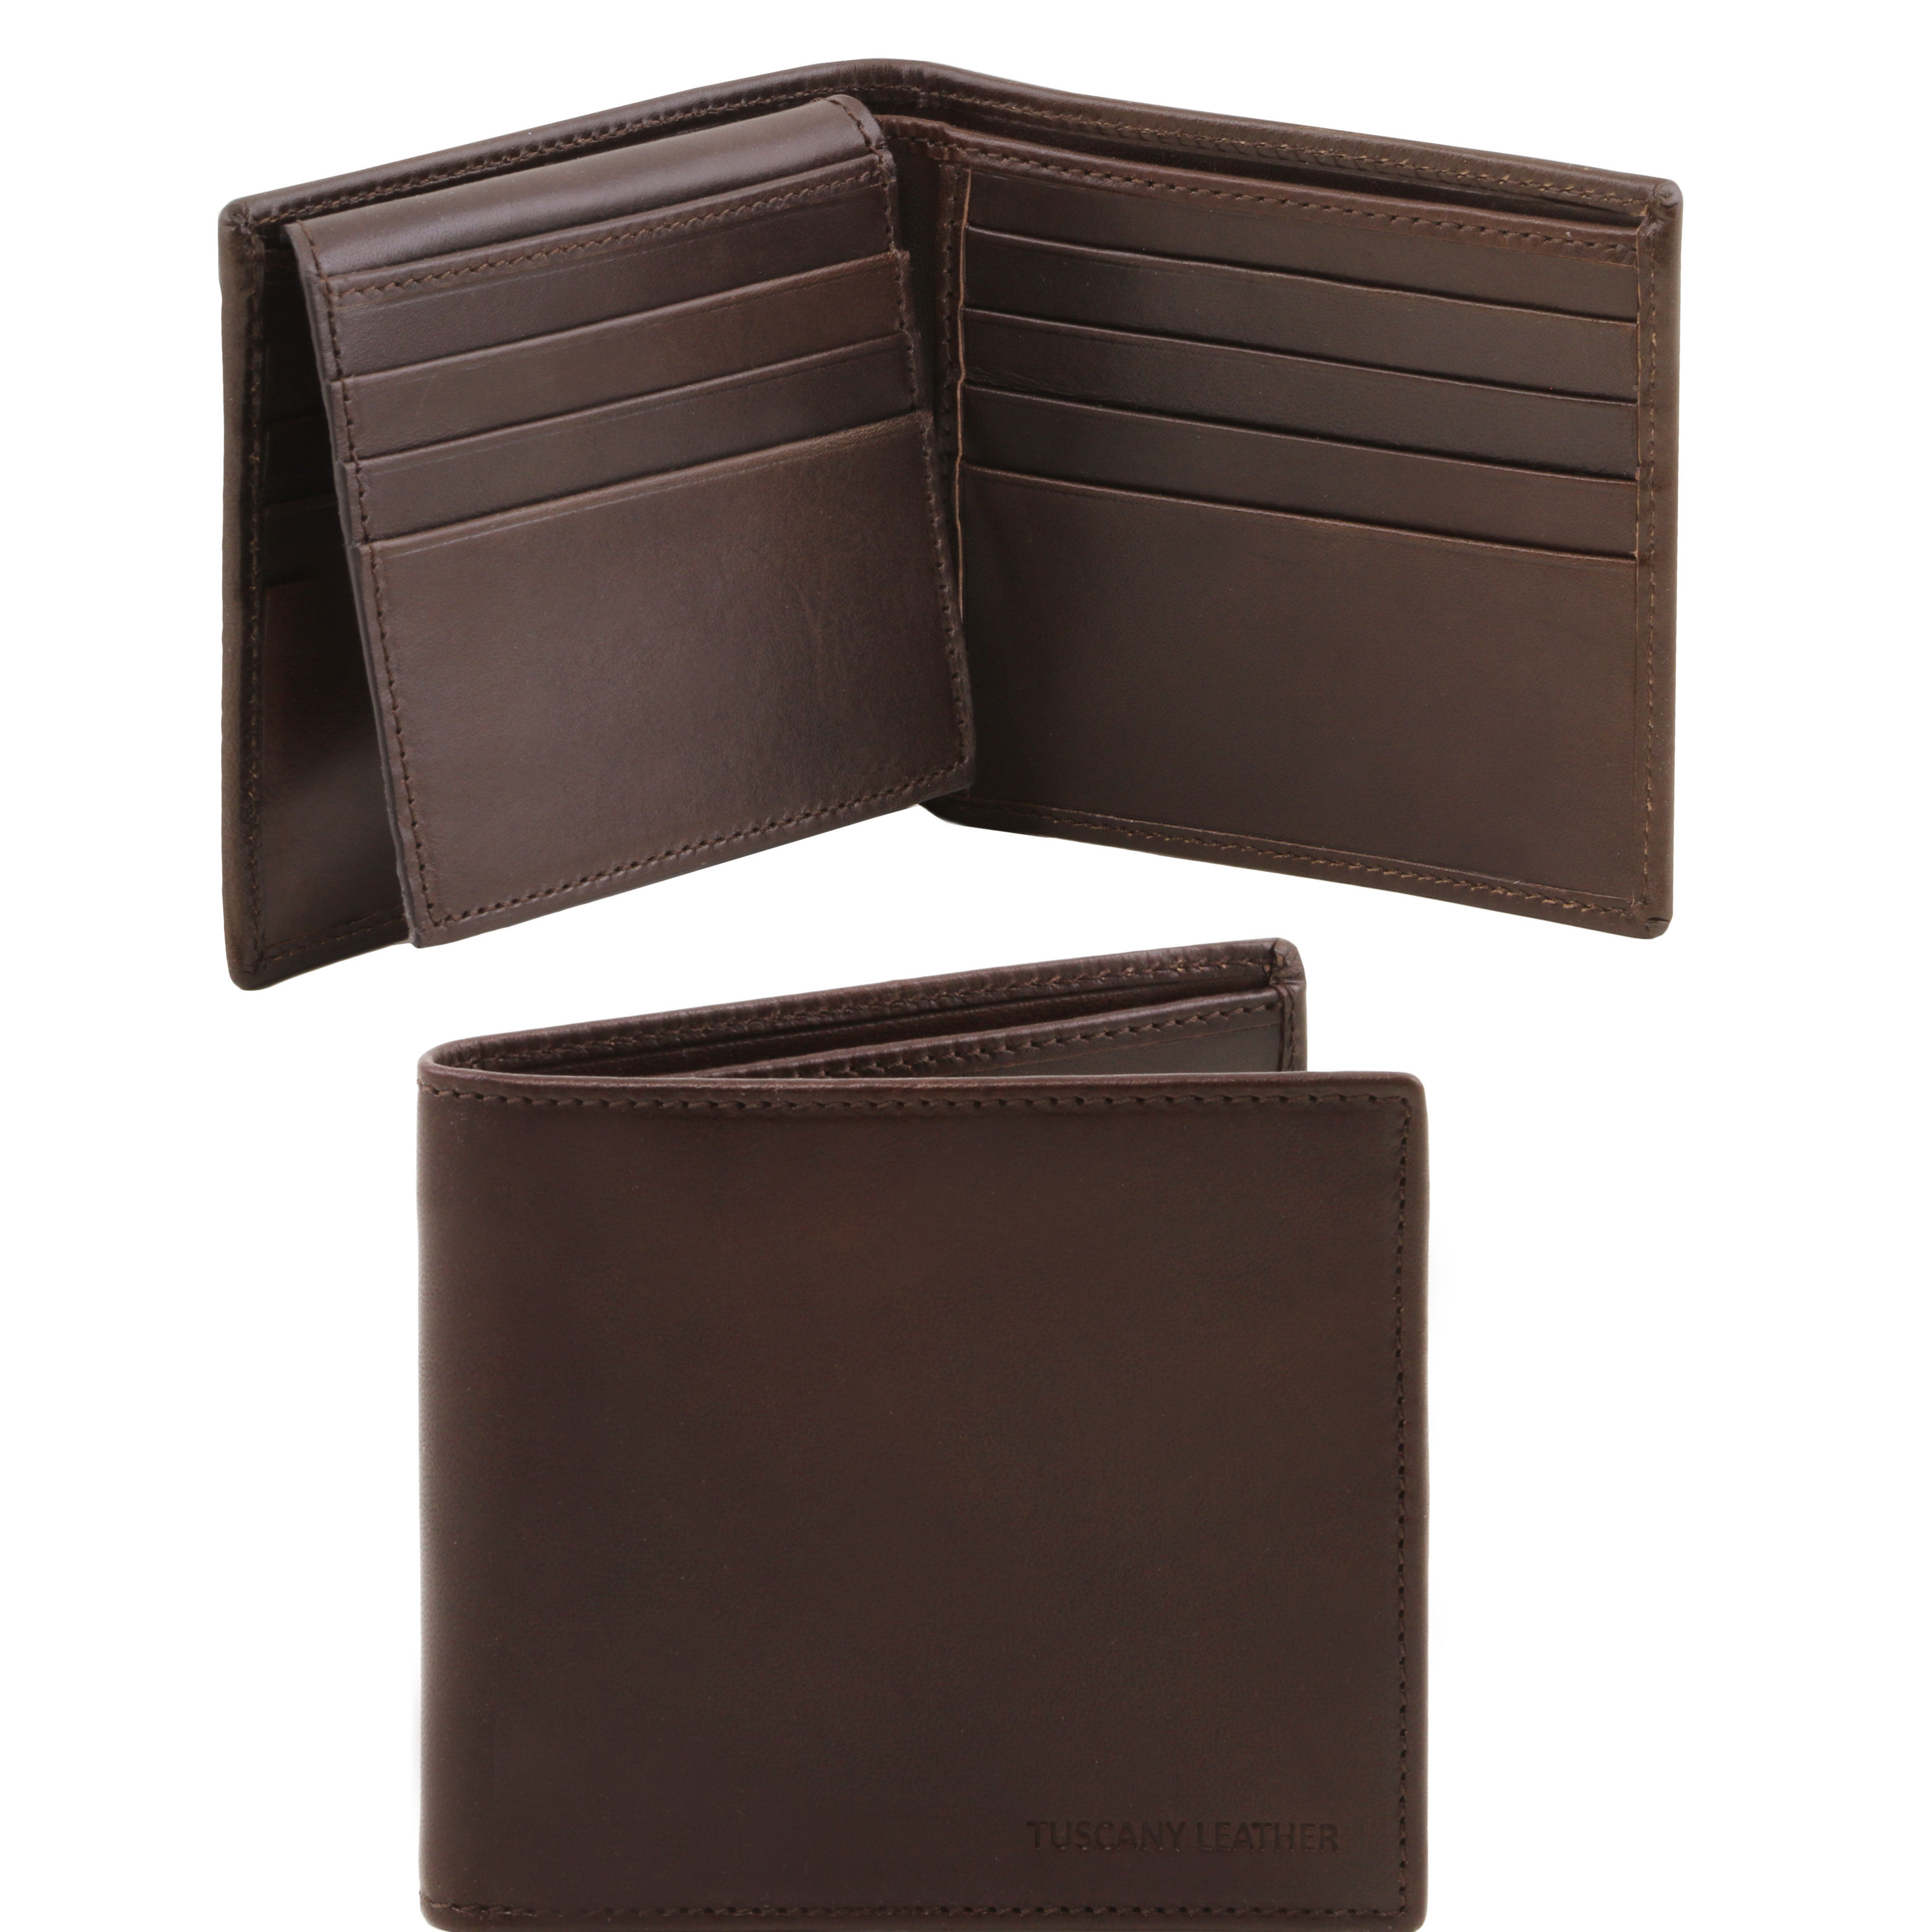 Portofel Tuscany Leather din piele maro inchis exclusive 3 fold